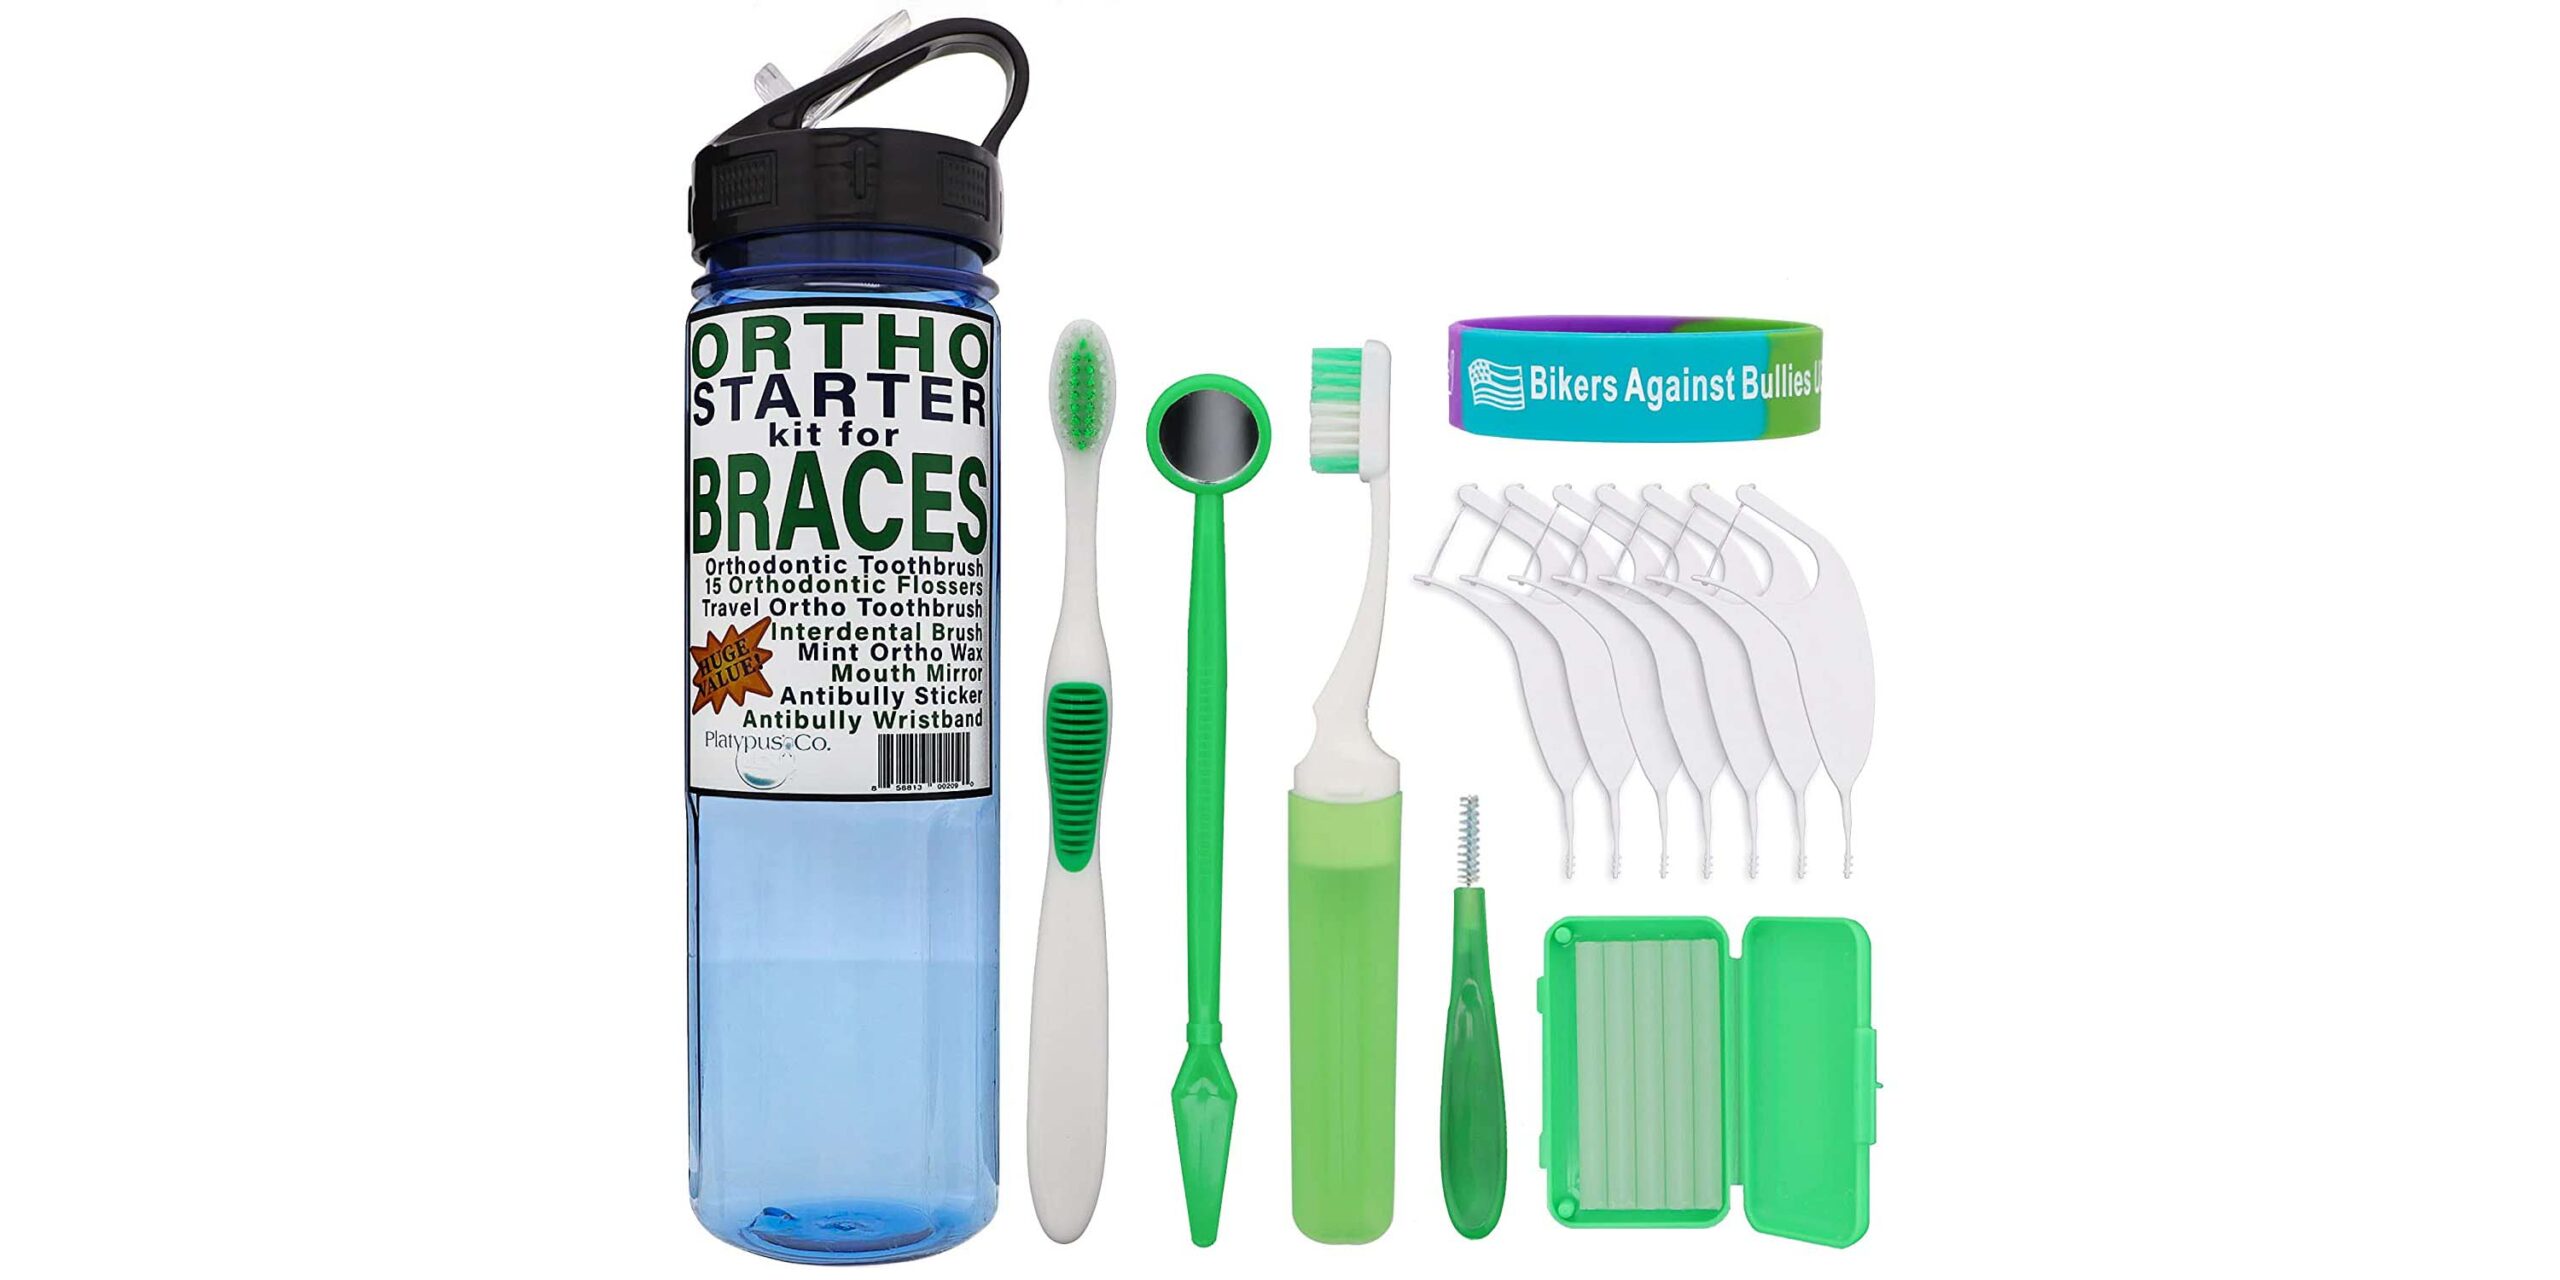 Enhance Your Dental Care with A Brace Kit